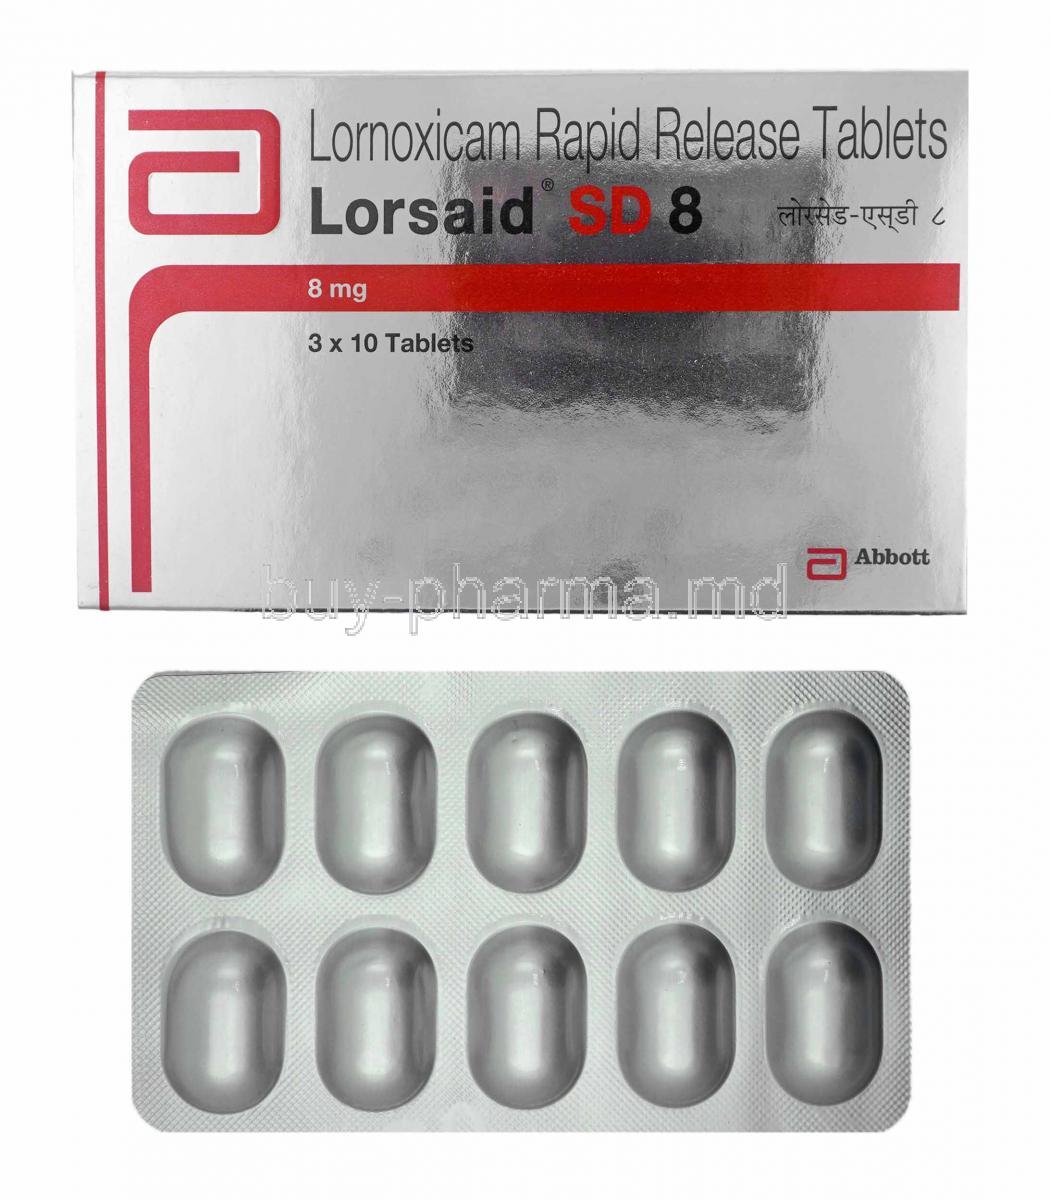 Lorsaid SD, Lornoxicam 8mg box and tablets